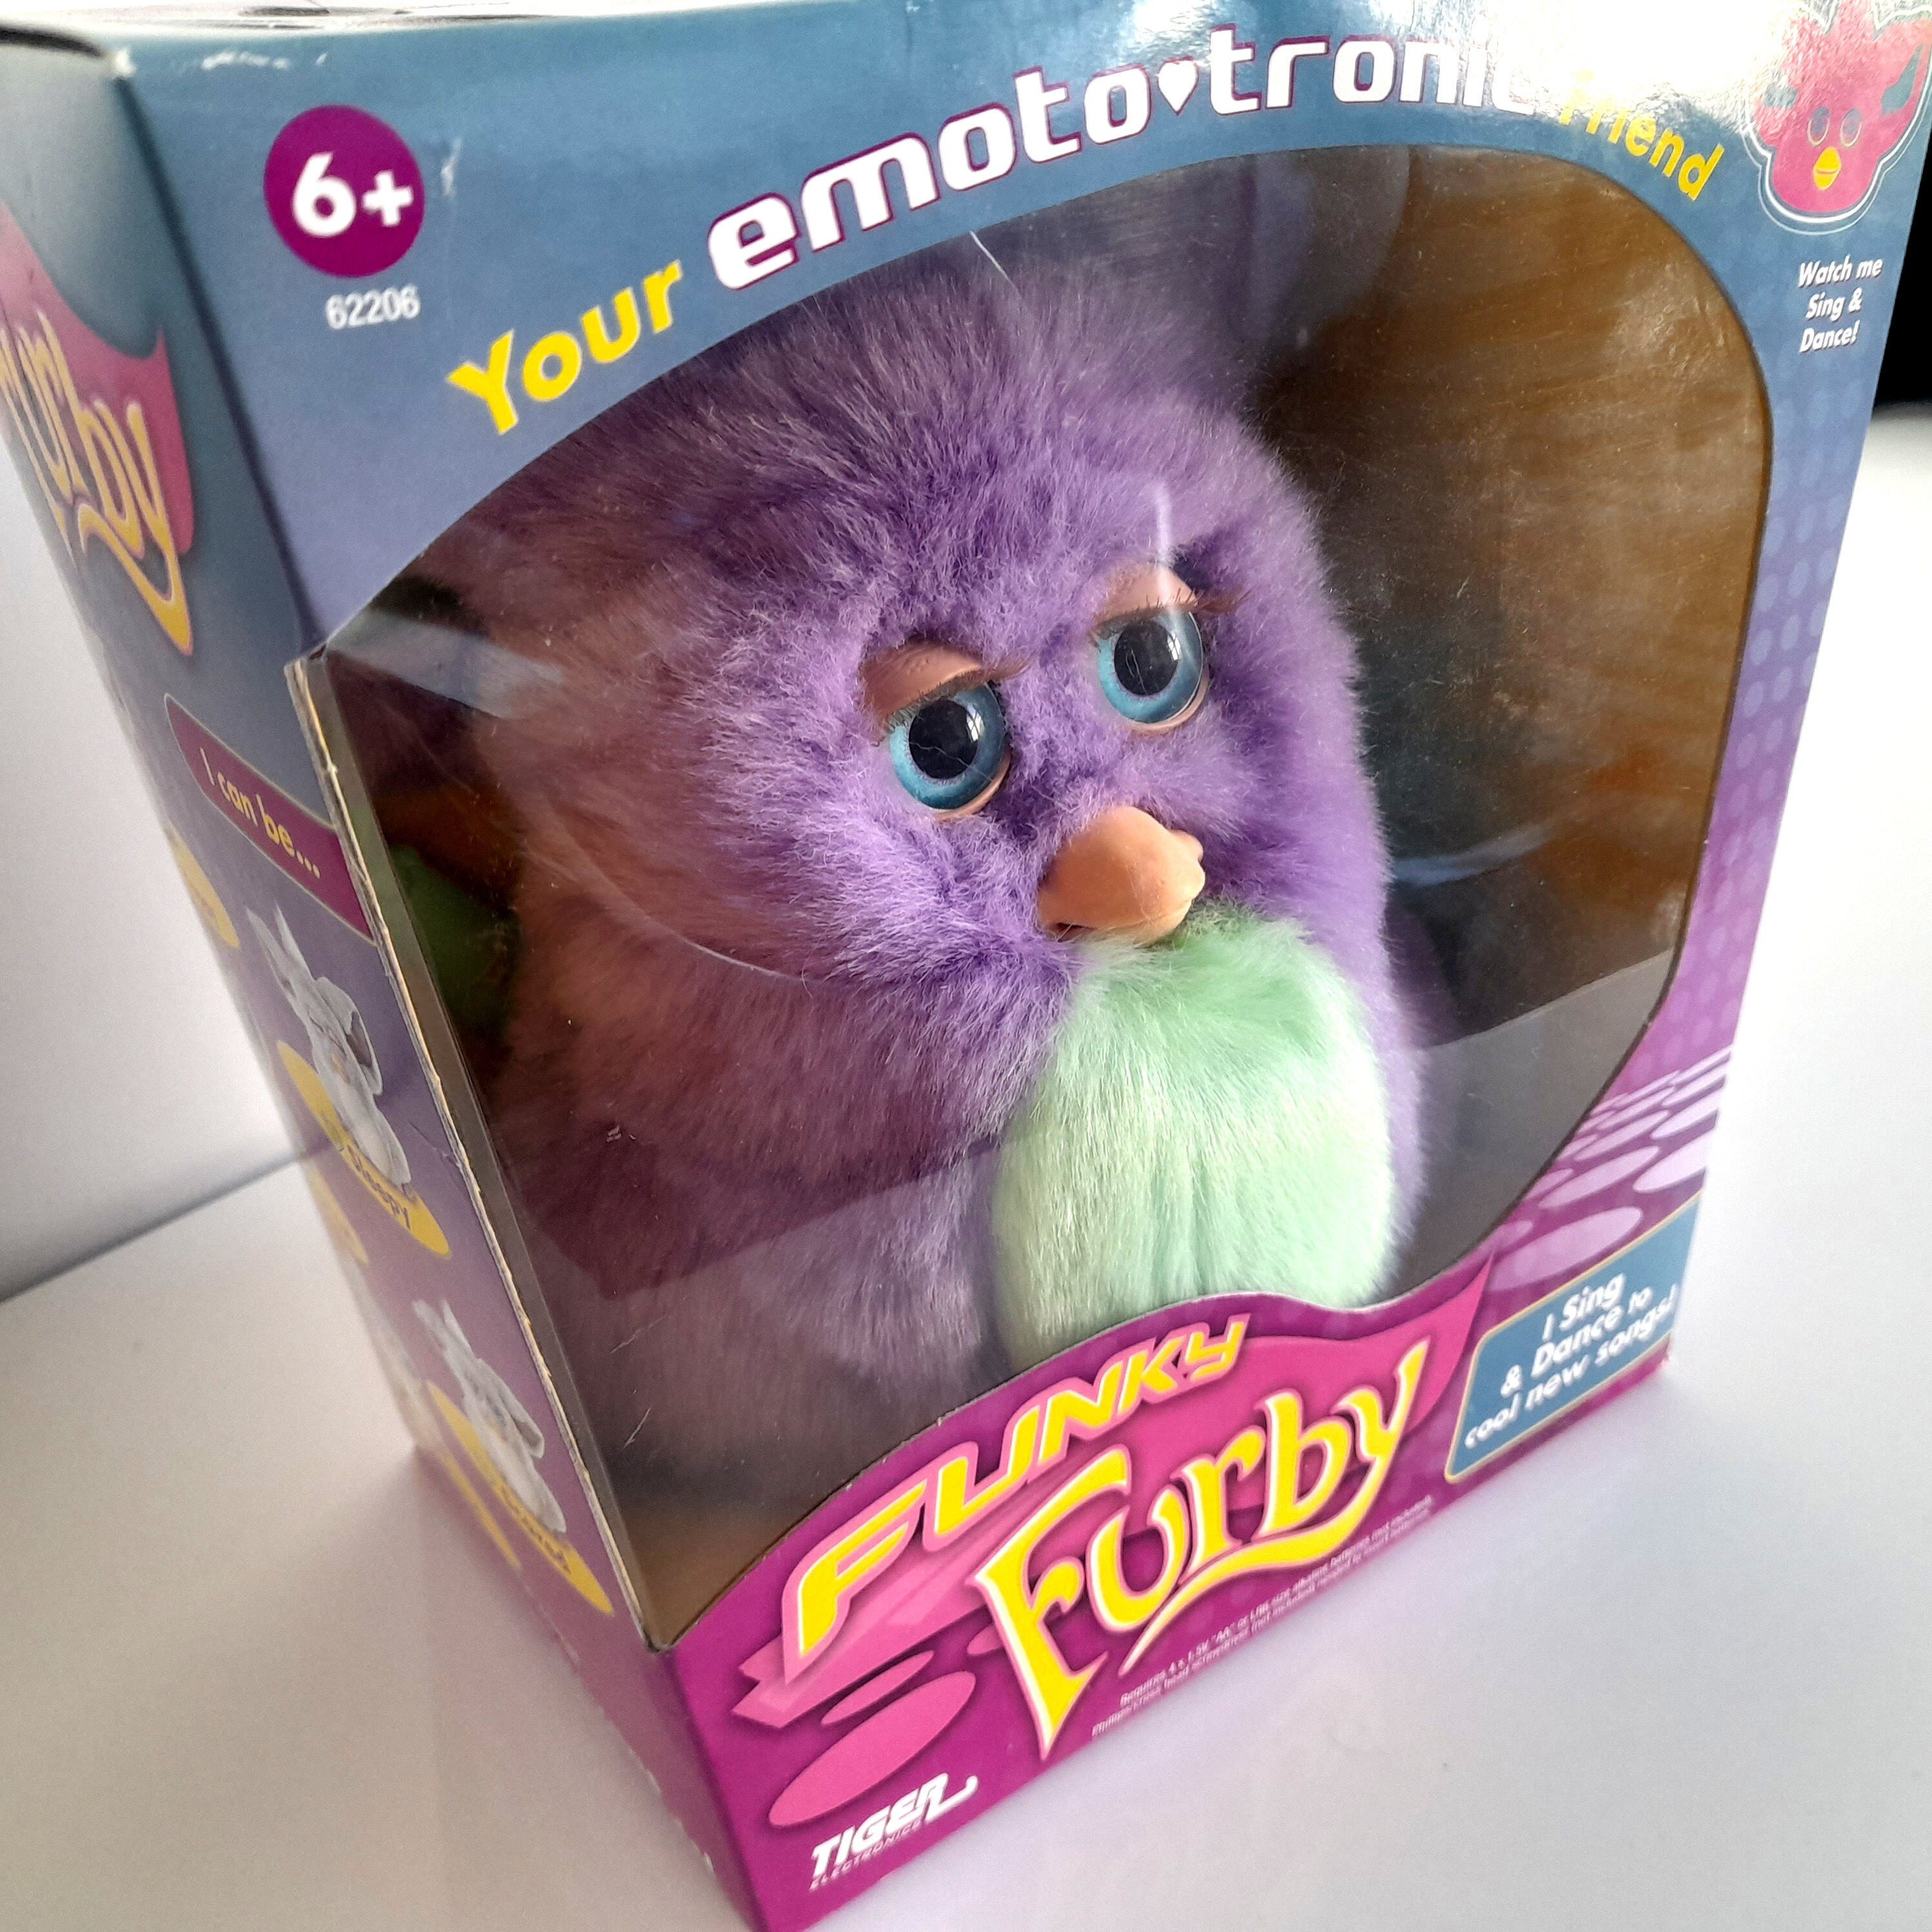 Furby - Peluche Interactive - Violet